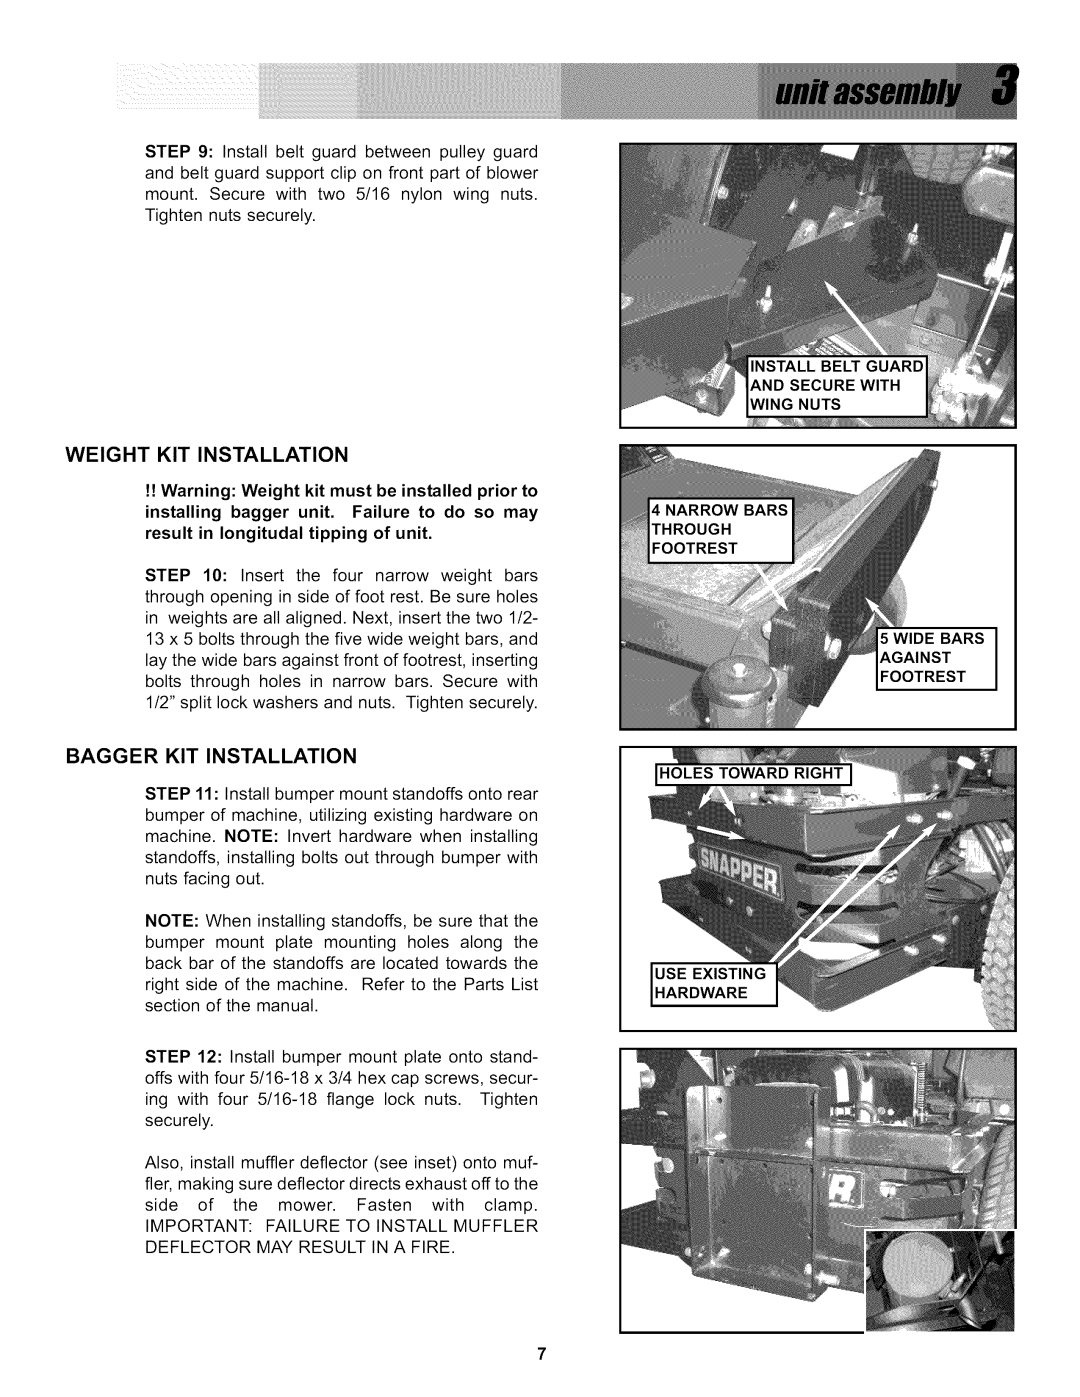 Snapper 0-50576, P/N 7078273 manual Weight Kit Installation, Bagger Kit Installation 